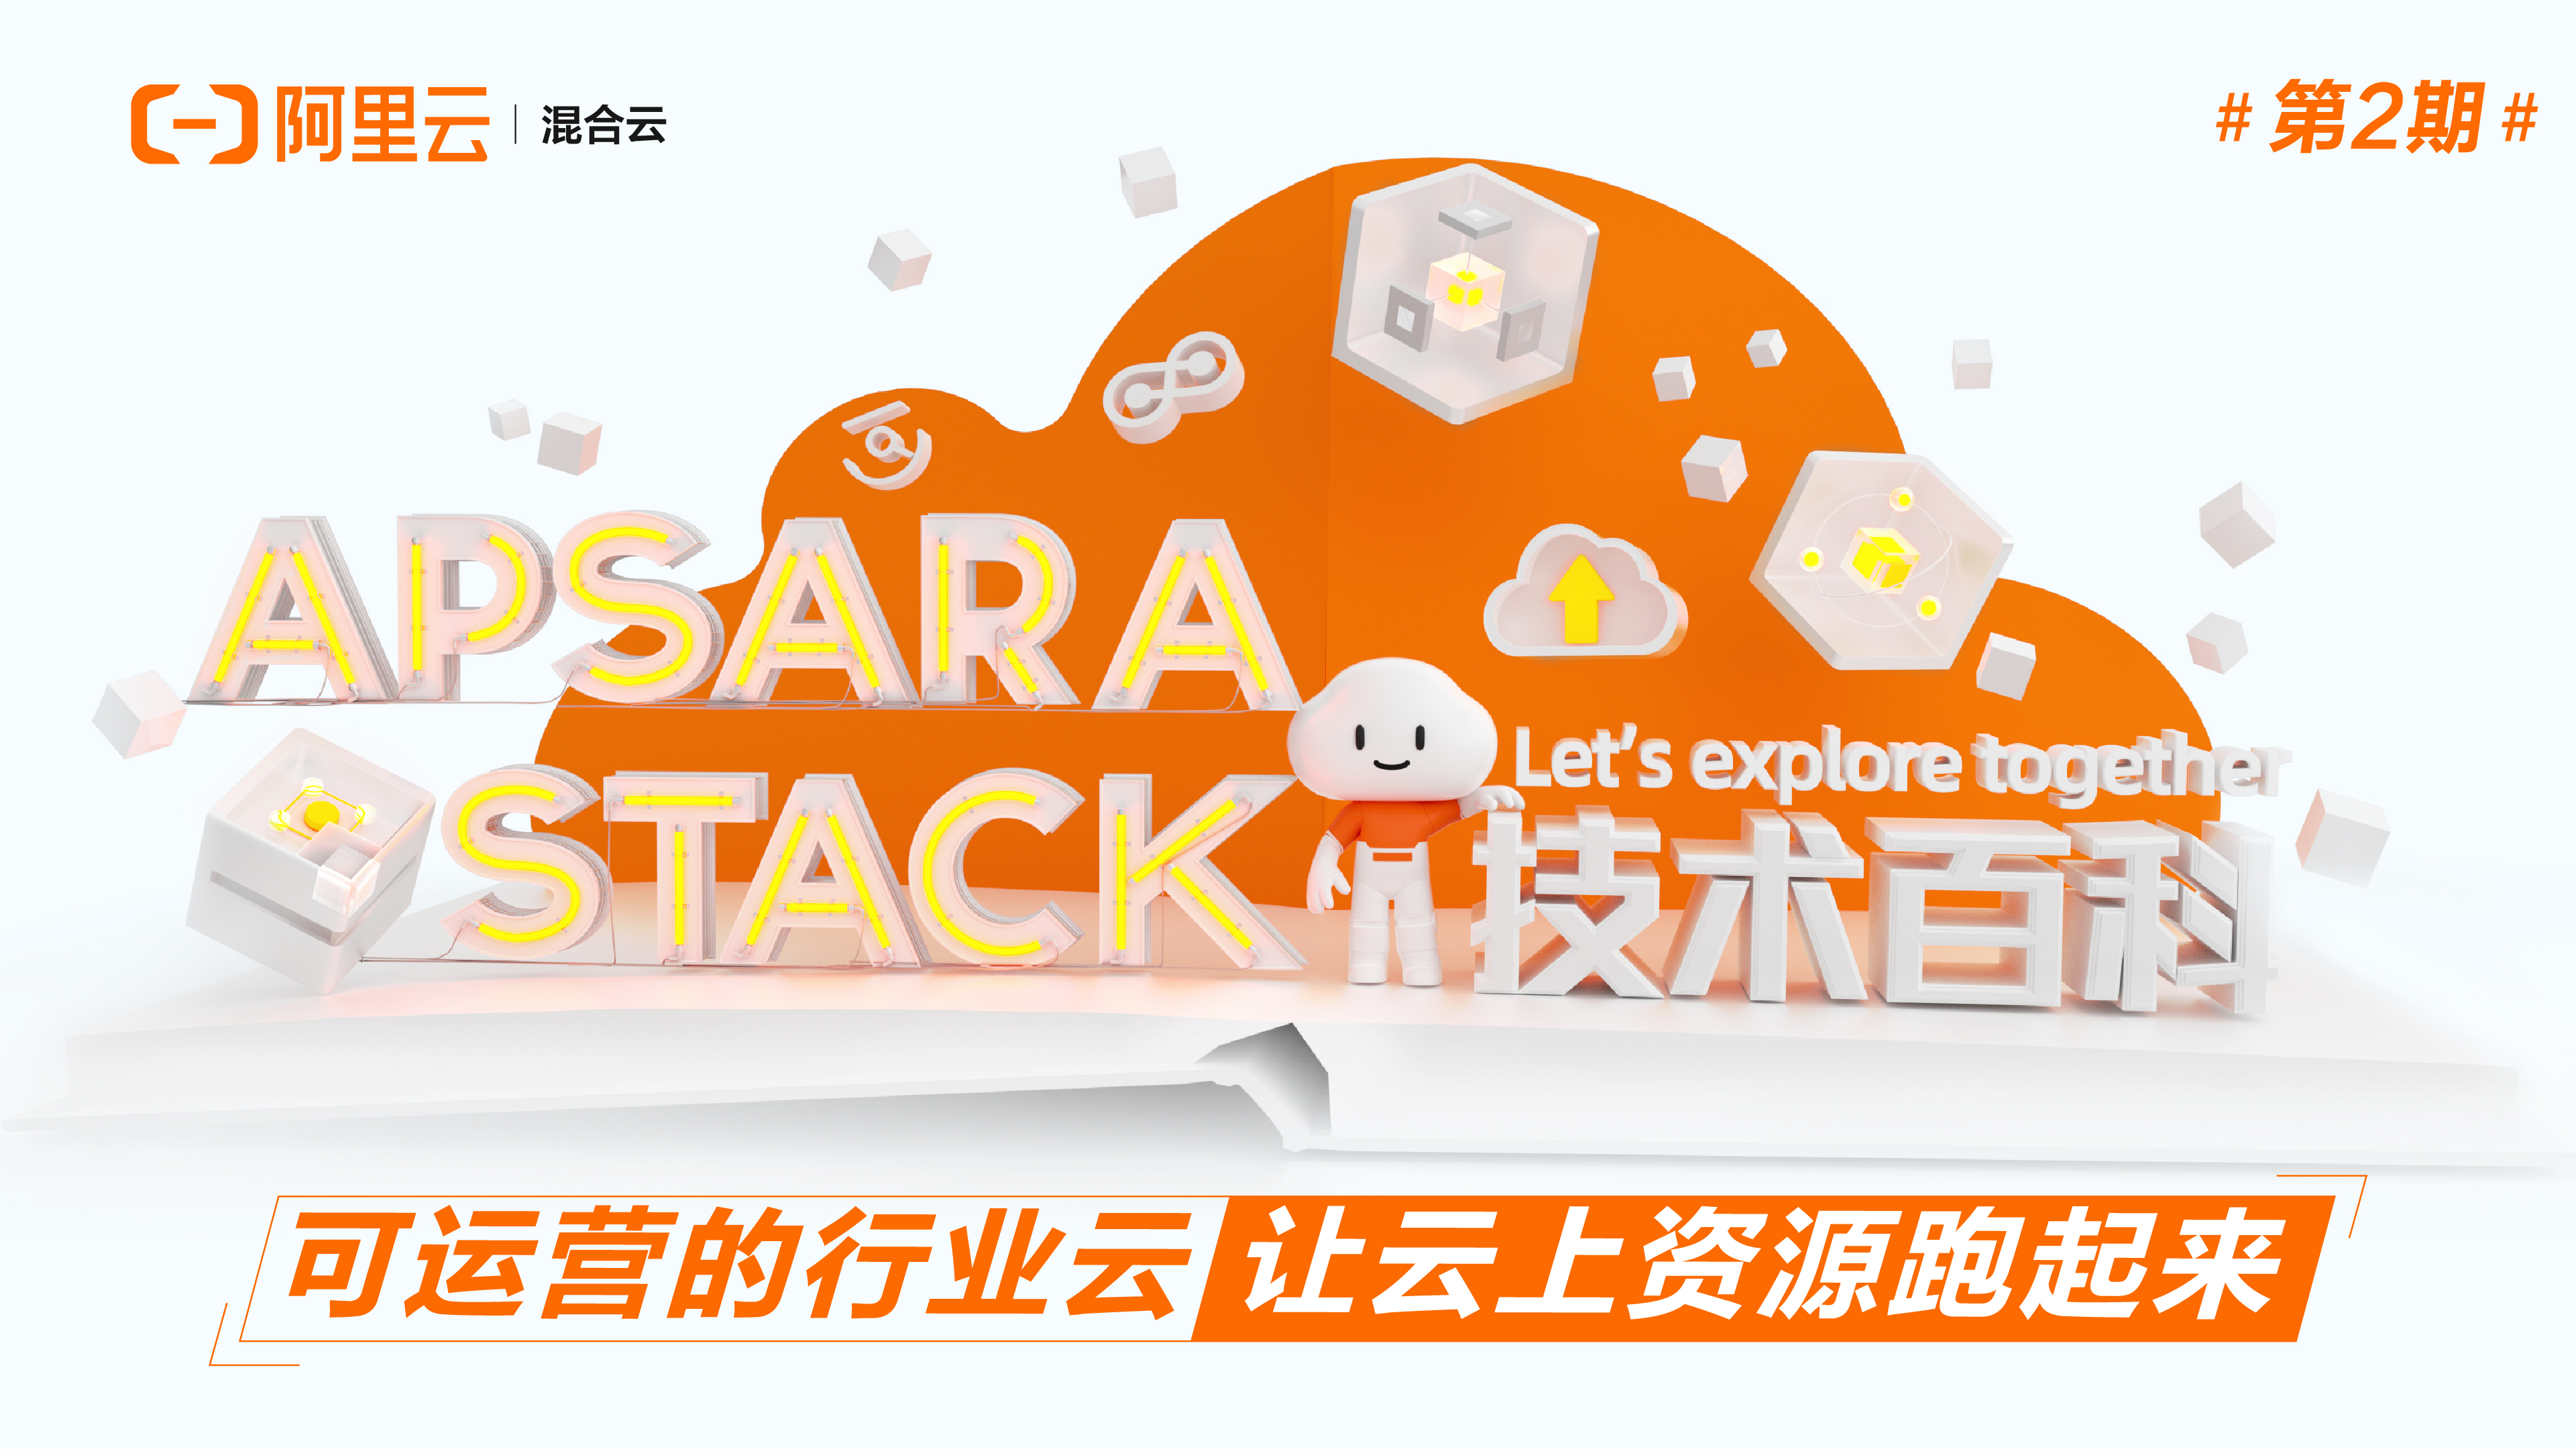 Apsara Stack 技术百科 | 可运营的行业云，让云上资源跑起来